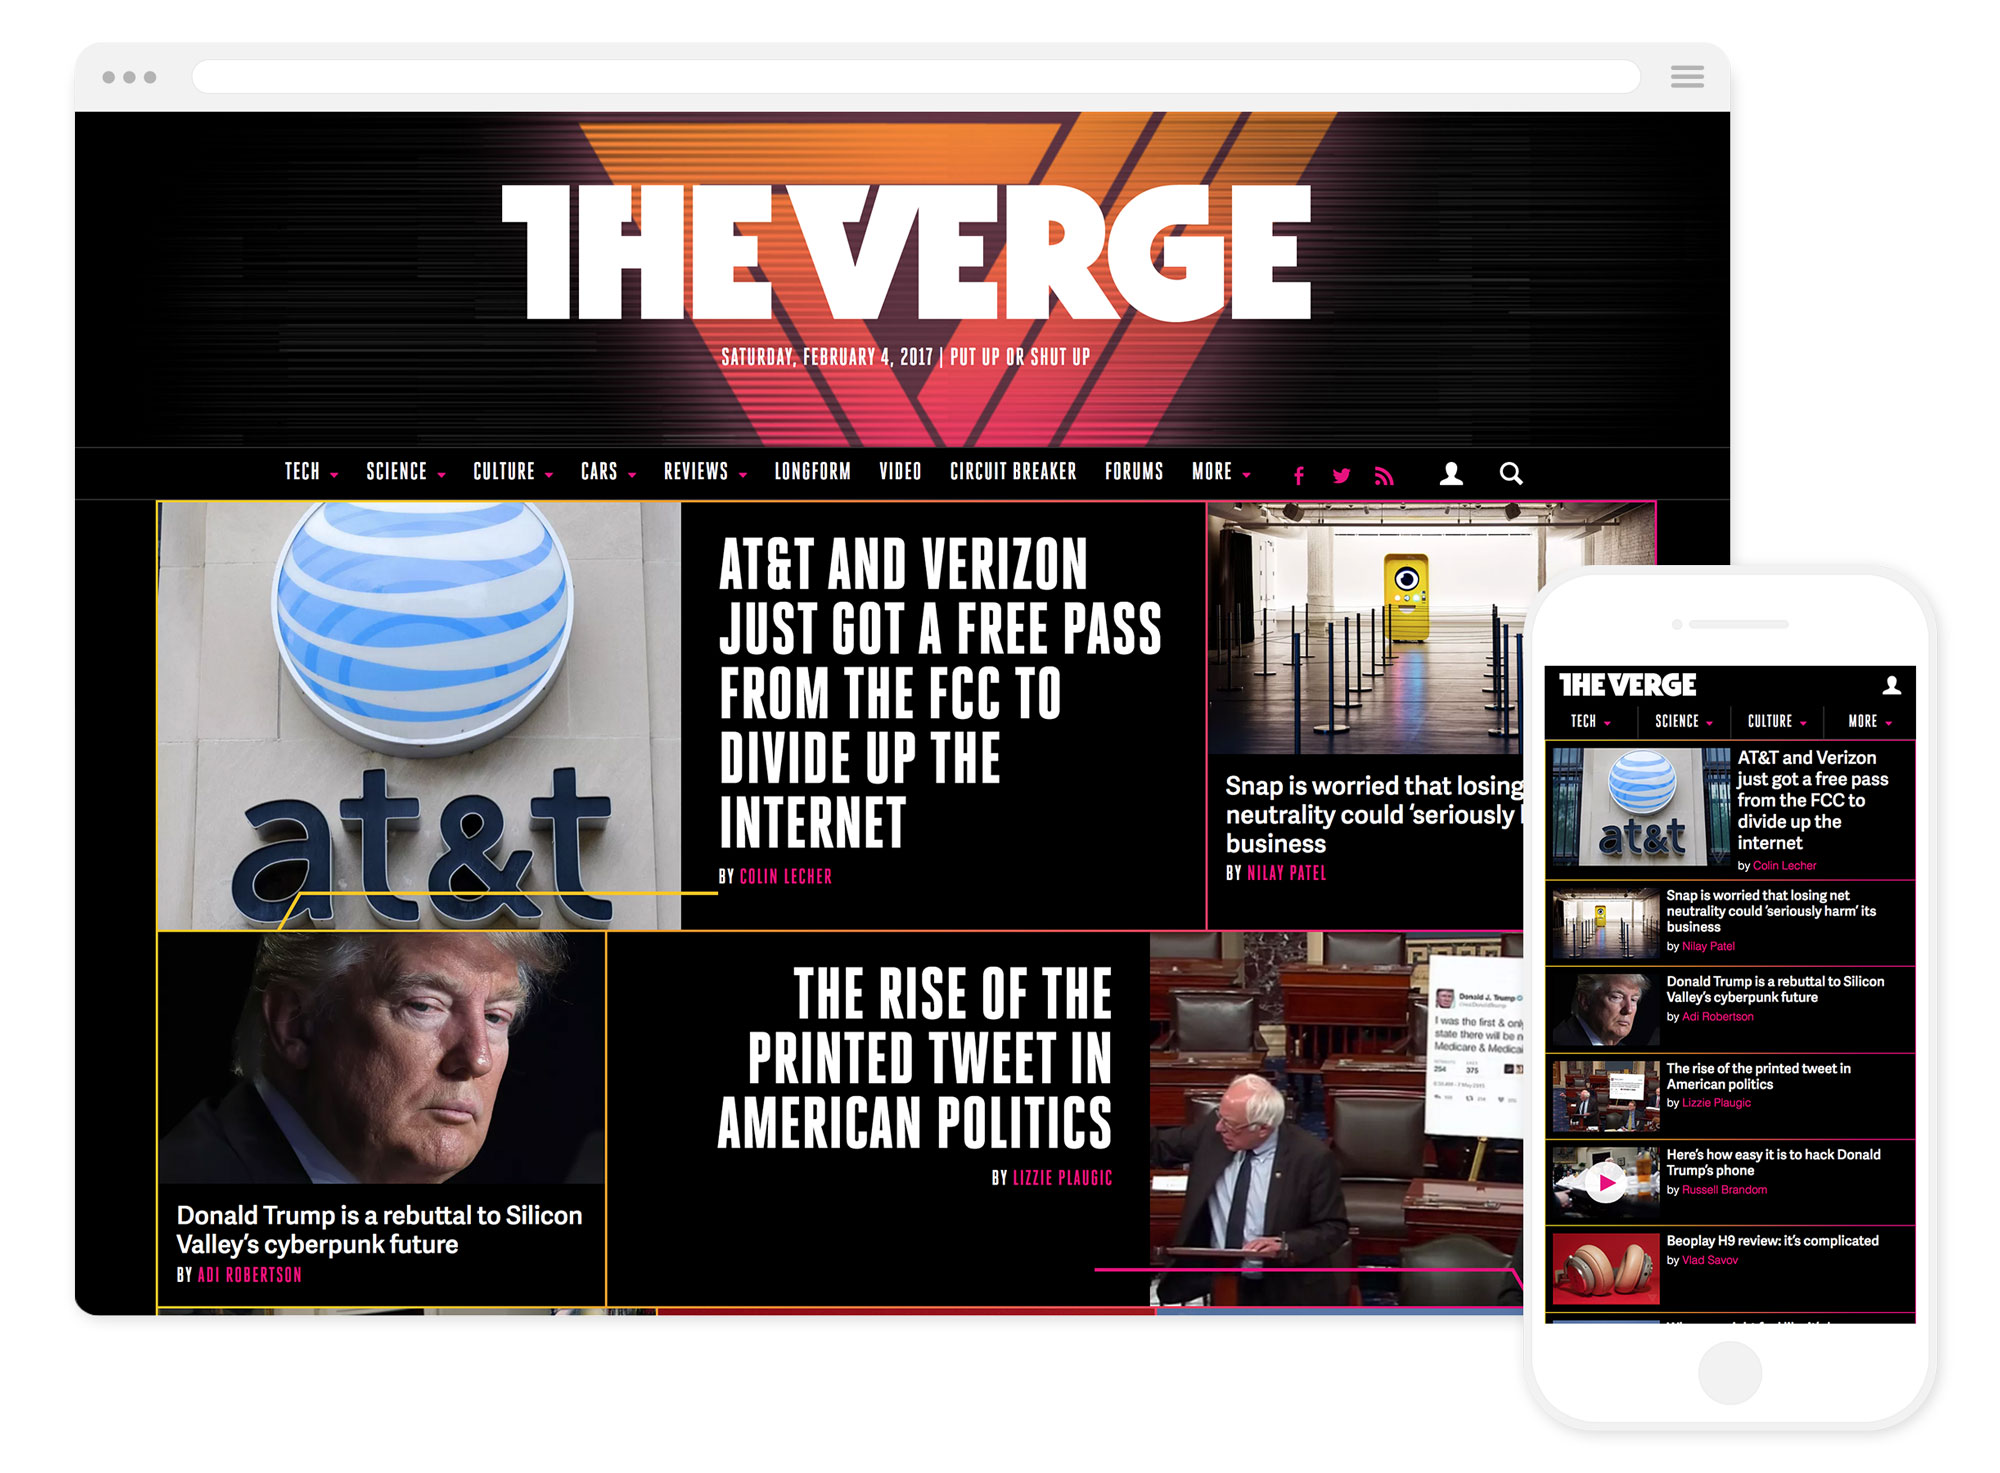 The Verge's brand new homepage